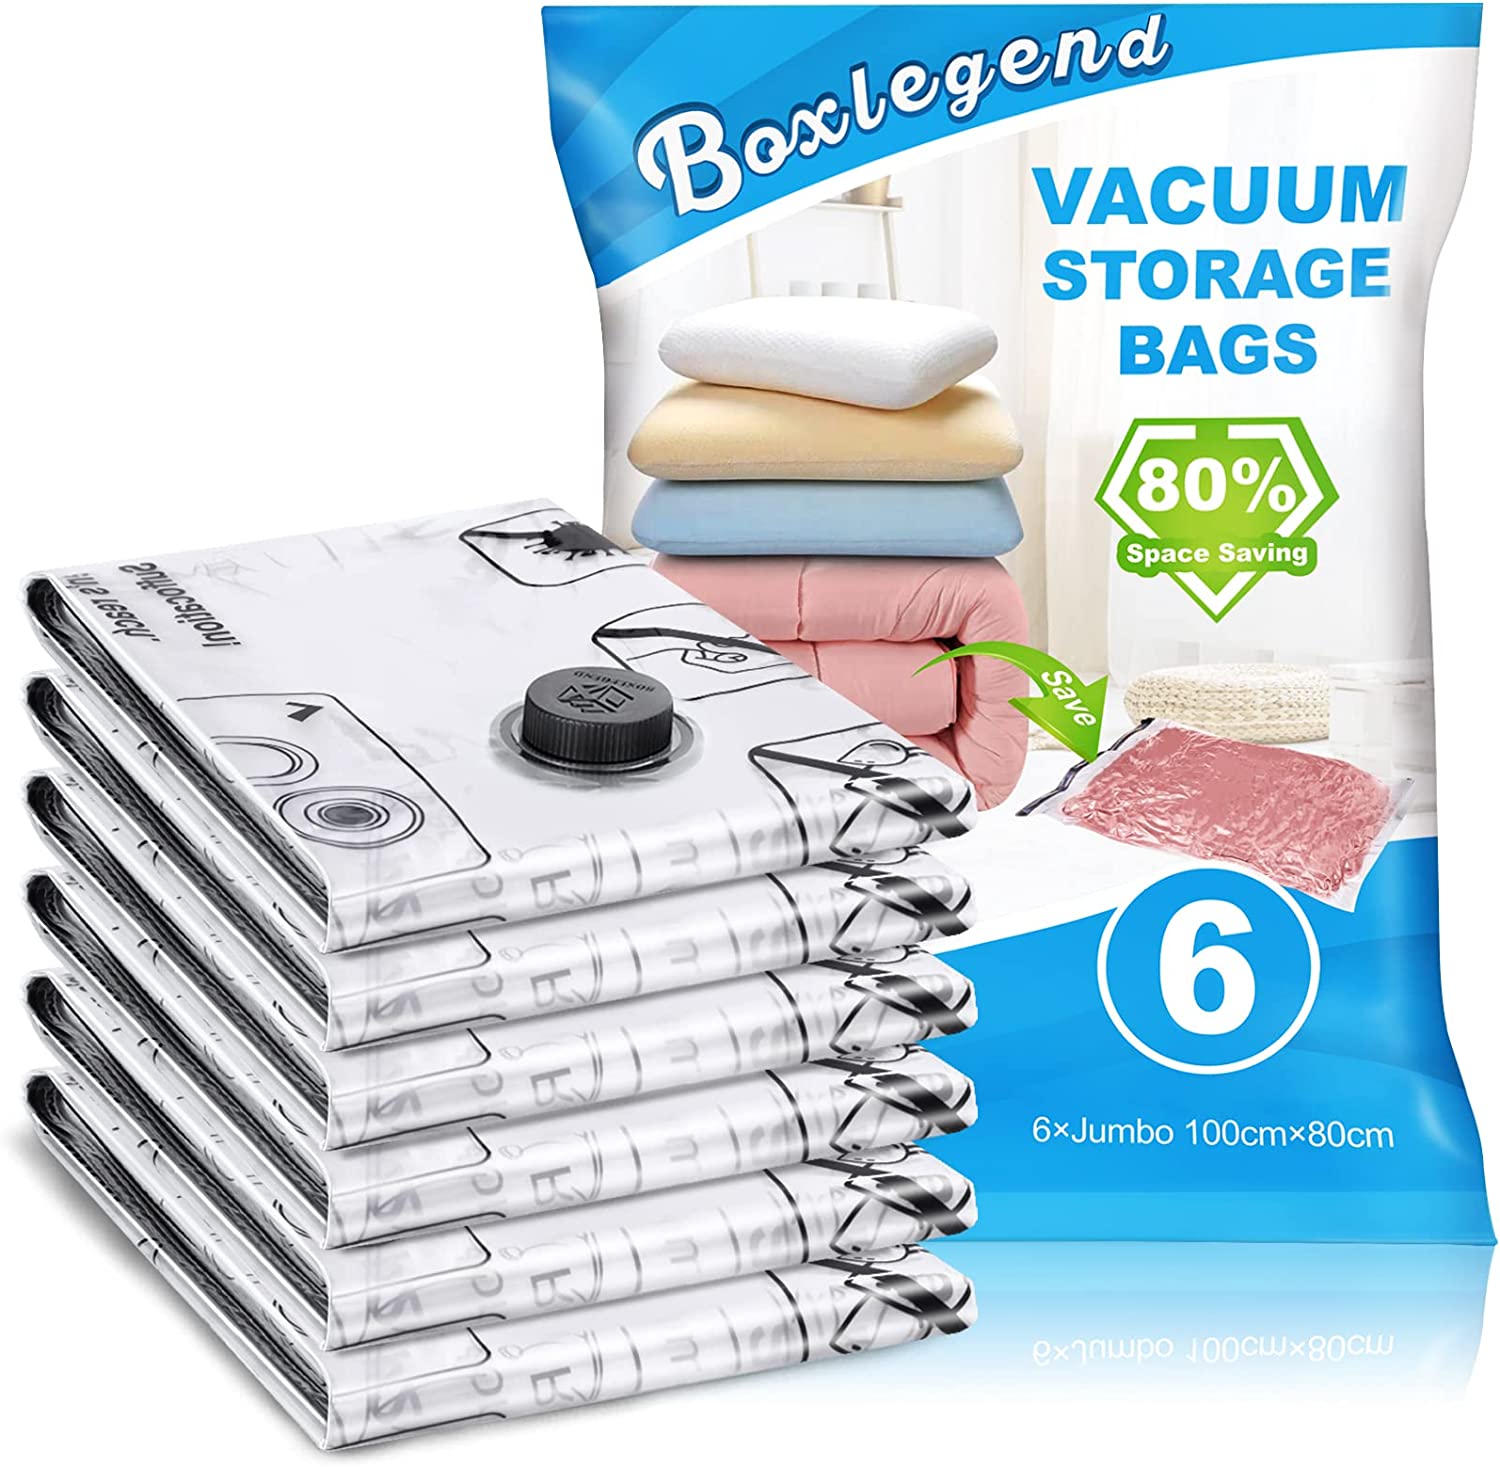 Pack of 11 Vacuum storage bags - 3 Jumbo (100x80cm), 2 Large